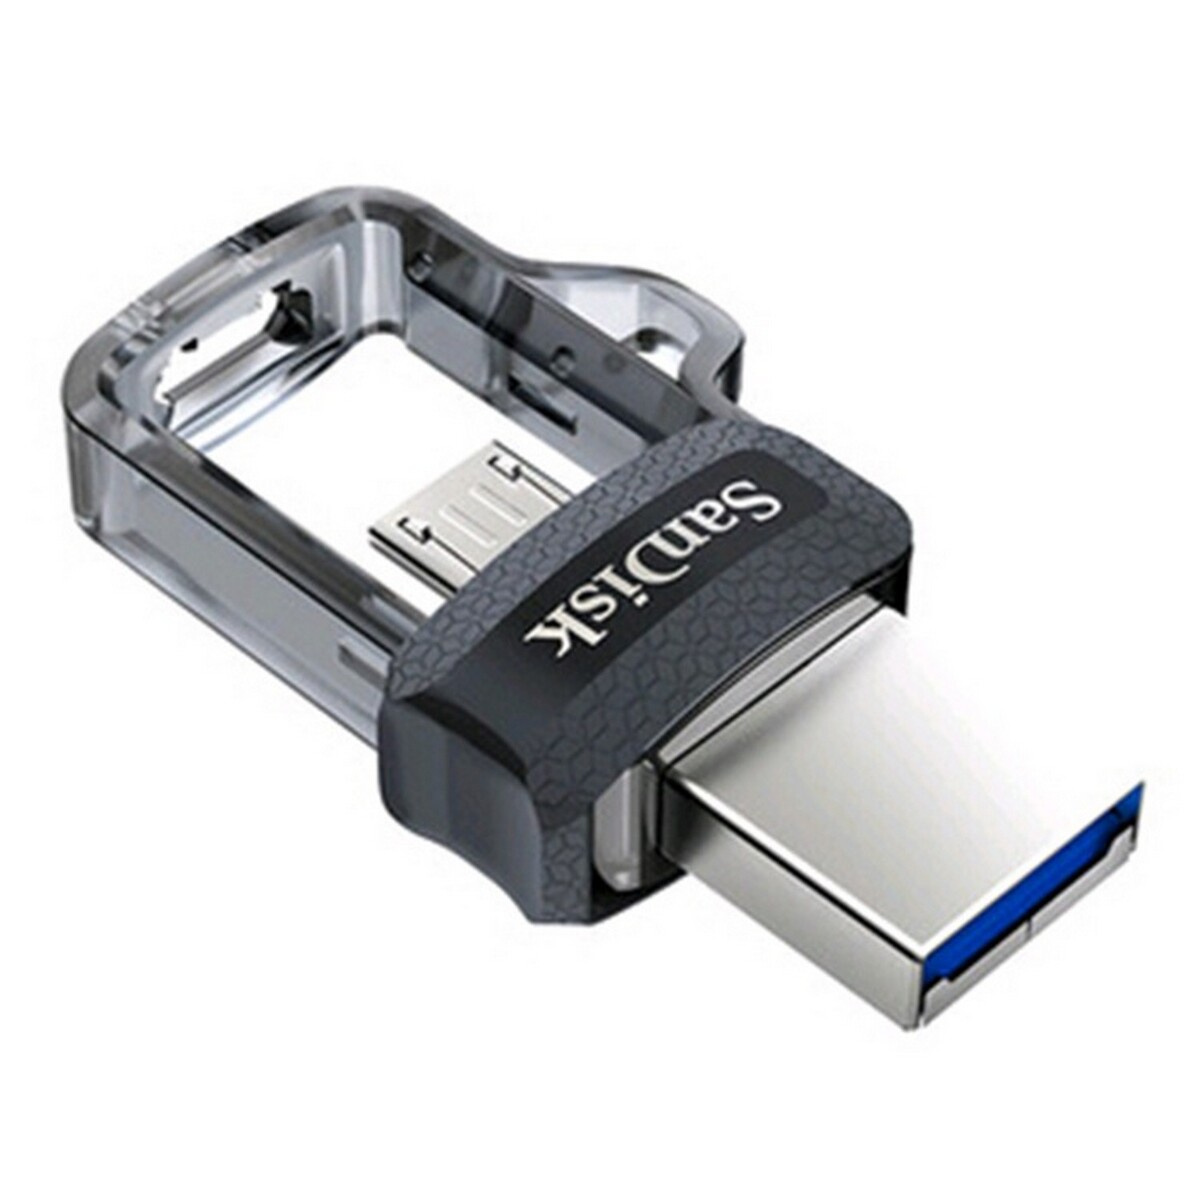 Sandisk Dual USB Fash Drive 32GB/80MBs